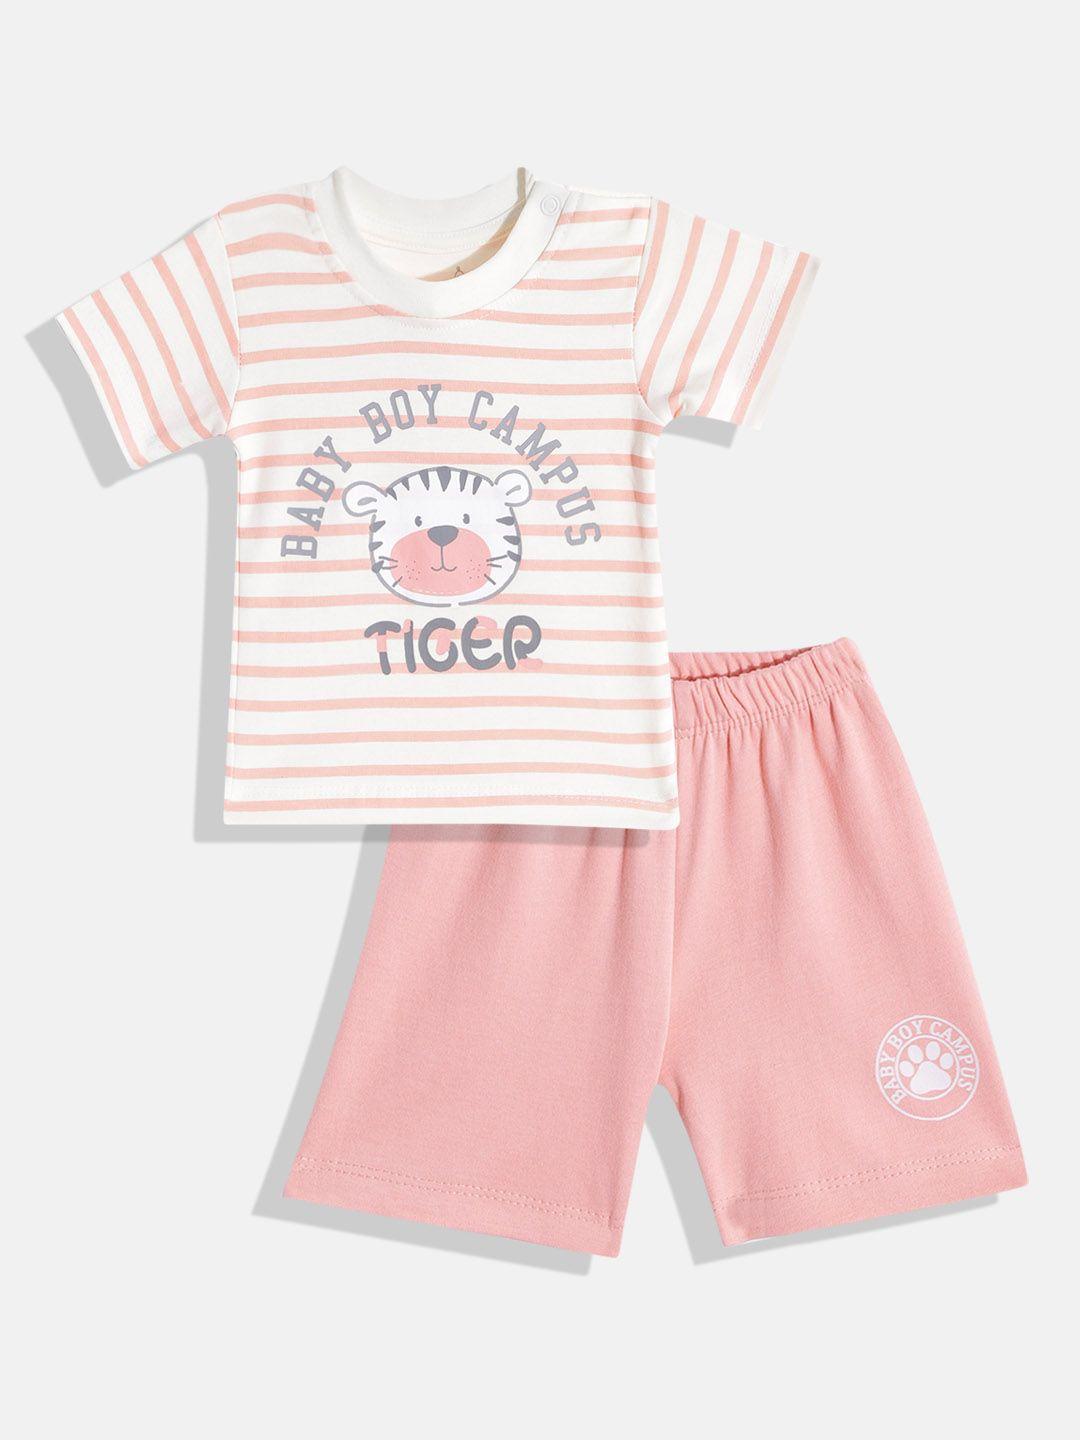 TINYO Infant Boys Cream-Coloured & Peach-Coloured Striped Cotton Clothing Set